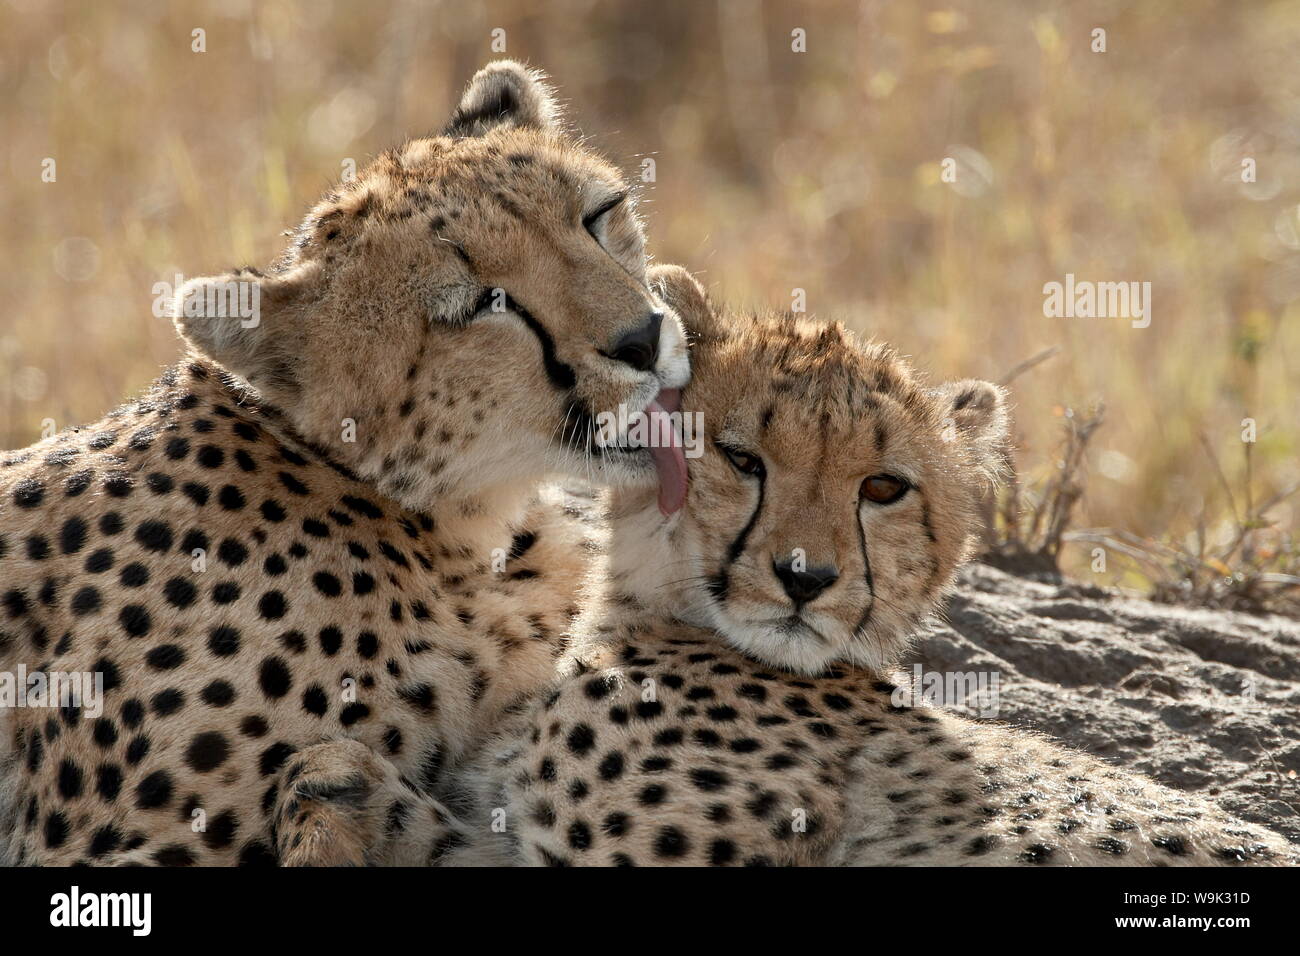 Cheetah (Acinonyx jubatus) mother and cub, Masai Mara National Reserve, Kenya, East Africa, Africa Stock Photo